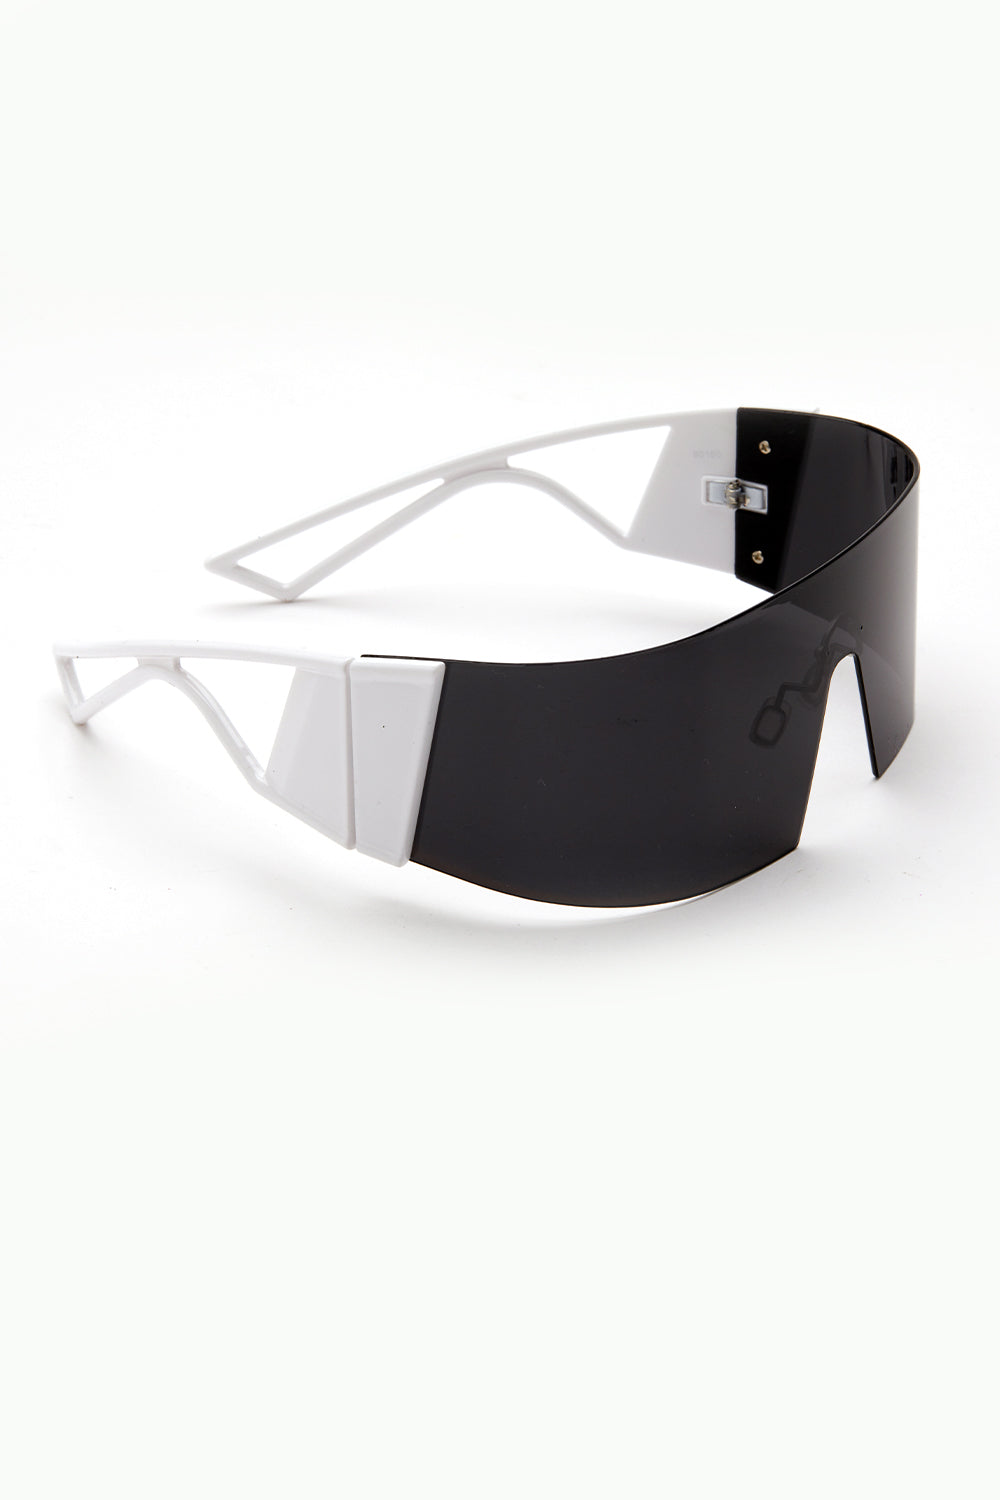 The Futurist Sunglasses - Slick It Up 